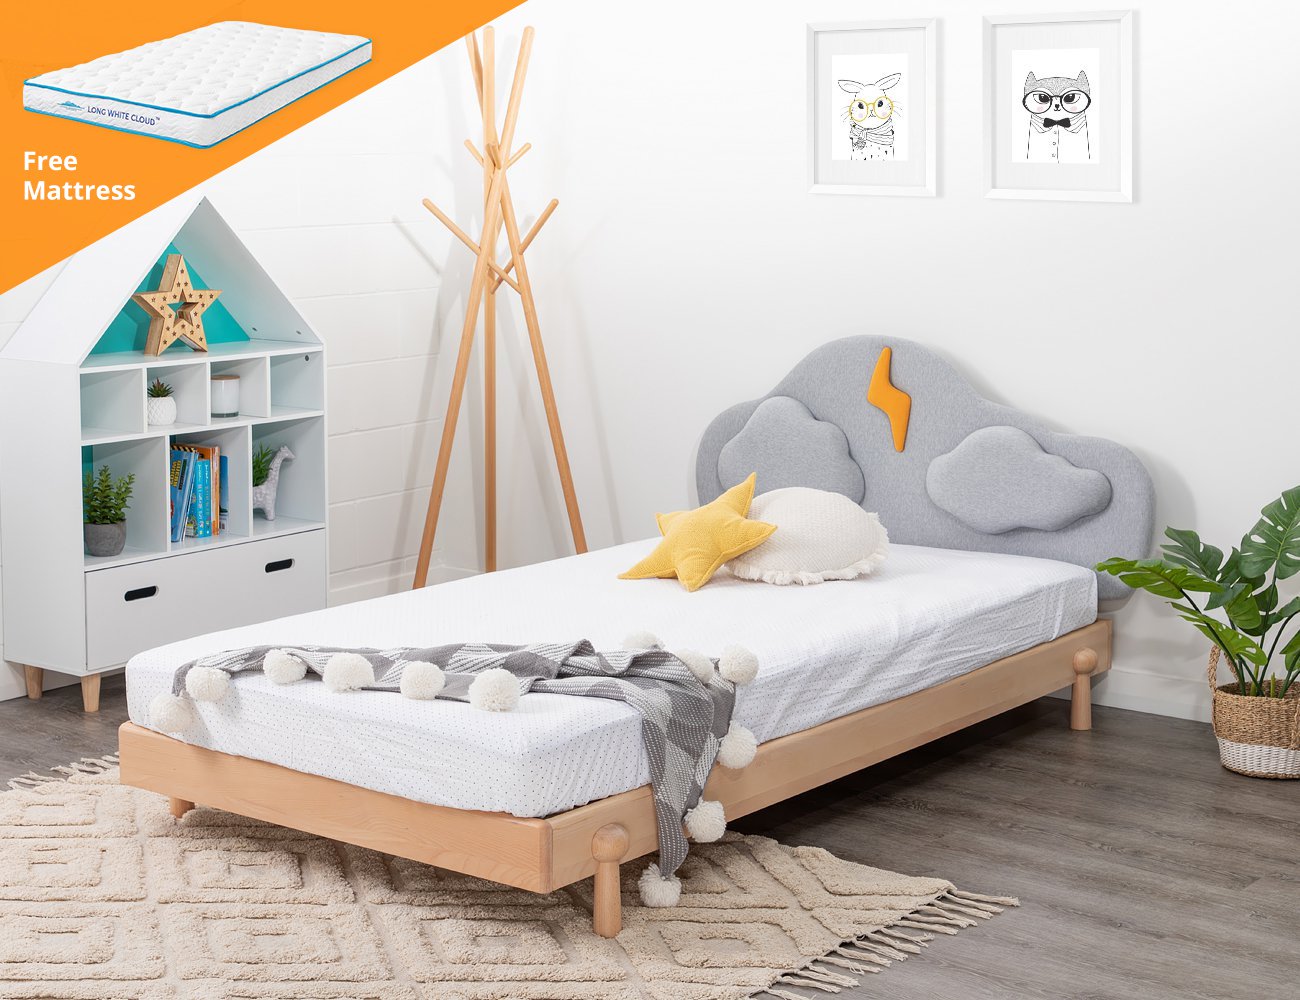 Cloud King Single Bed Frame + Mattress Set @ Crazy Sales - We have the